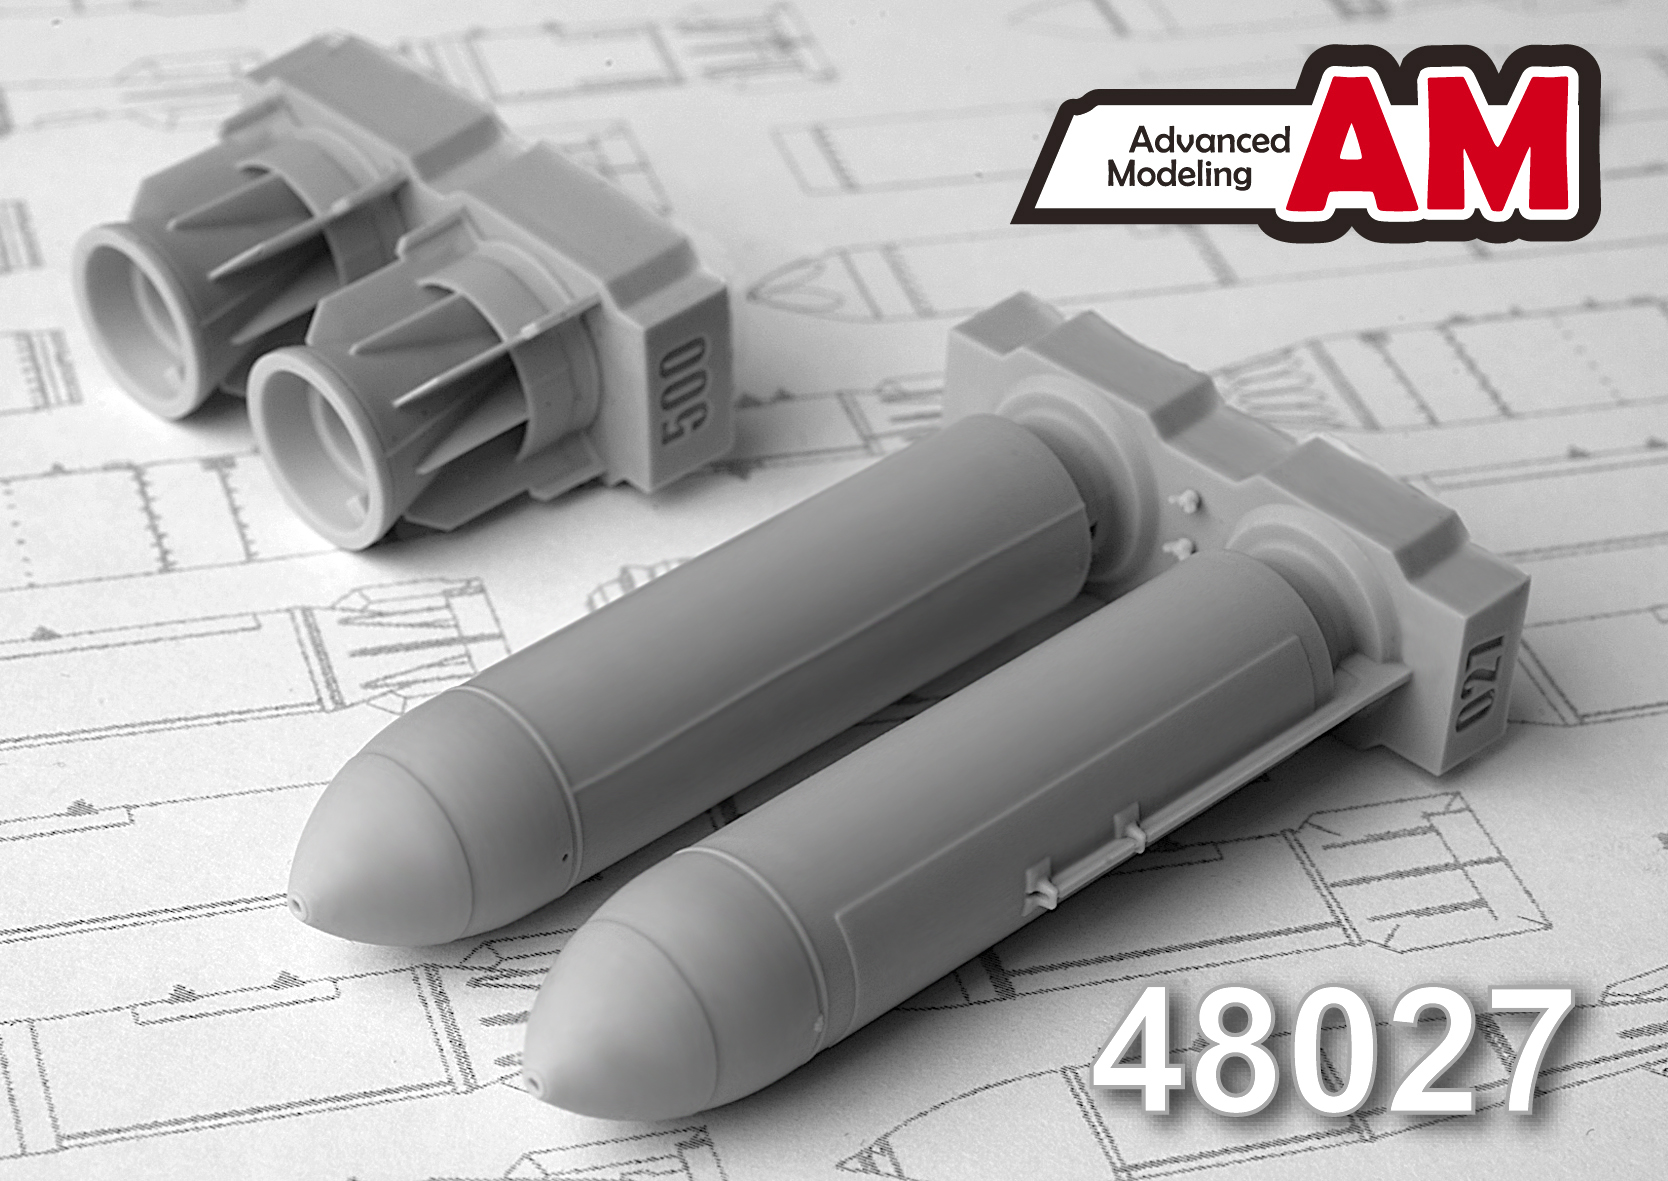 Additions (3D resin printing) 1/48 RBK-500 AO-2,5 RTM Cluster Bomb (Advanced Modeling) 